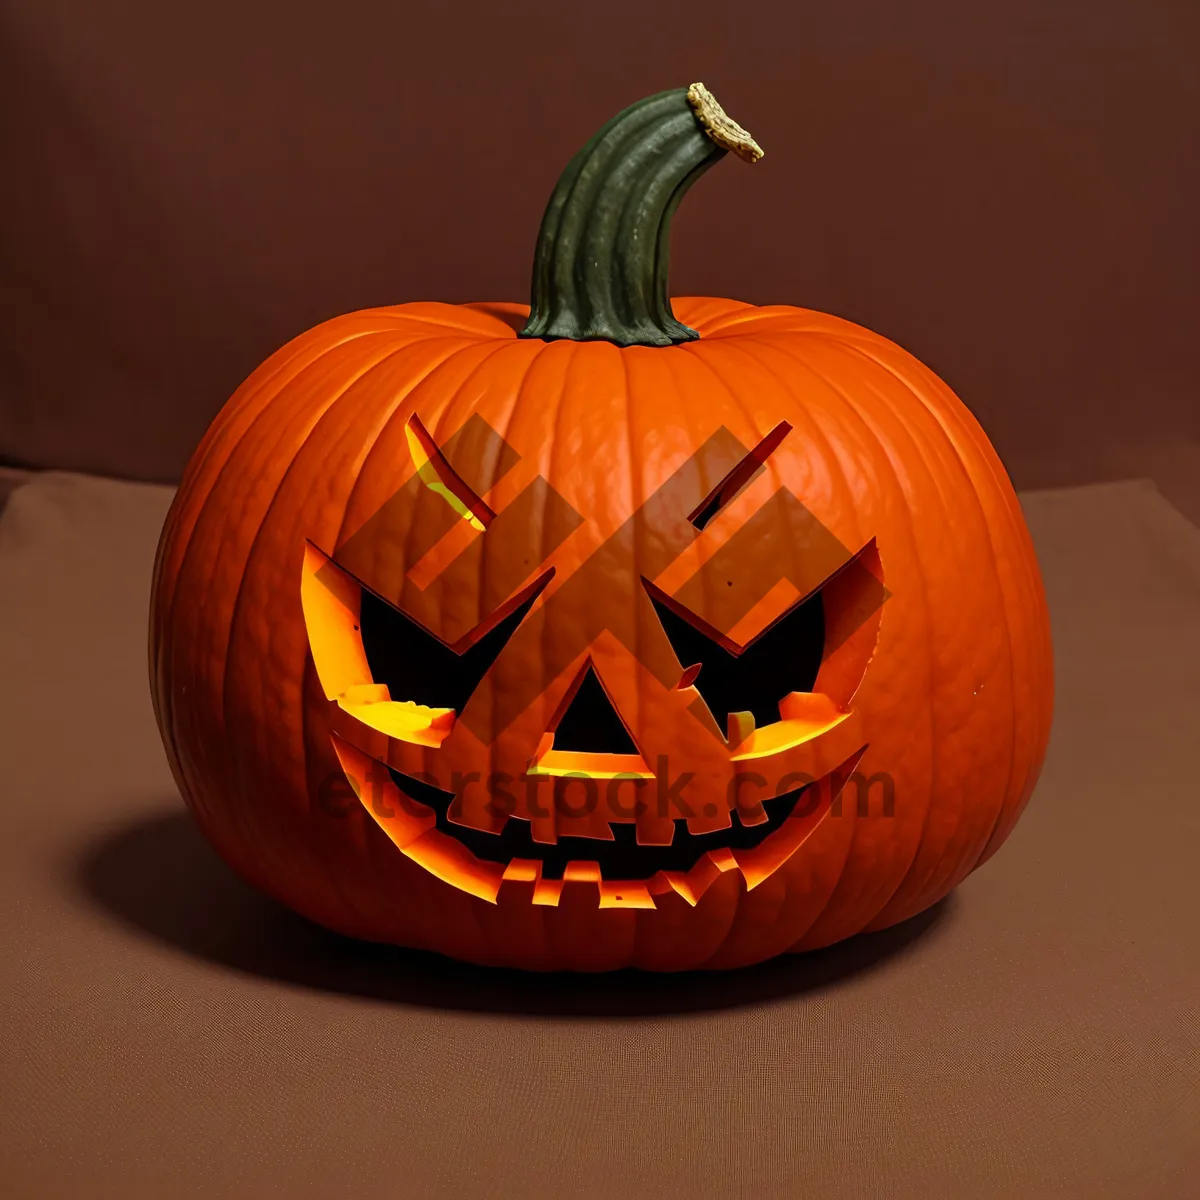 Picture of Spooky Jack-O'-Lantern Illuminating Fall Celebration